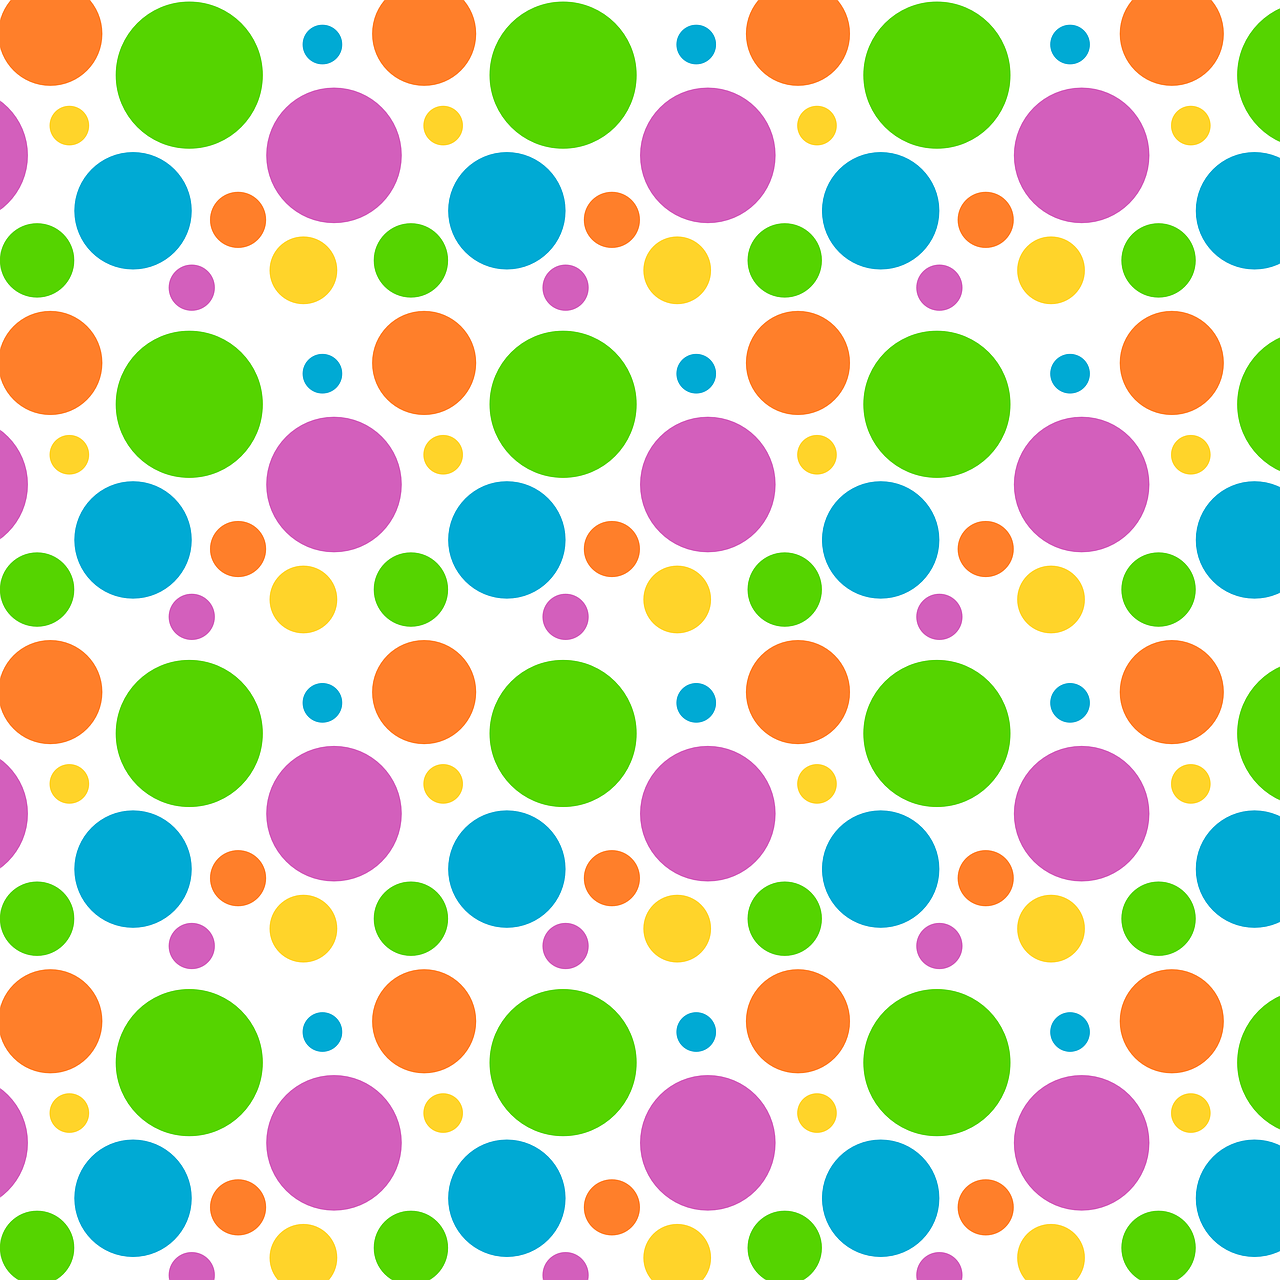 polka-dot background pattern free photo